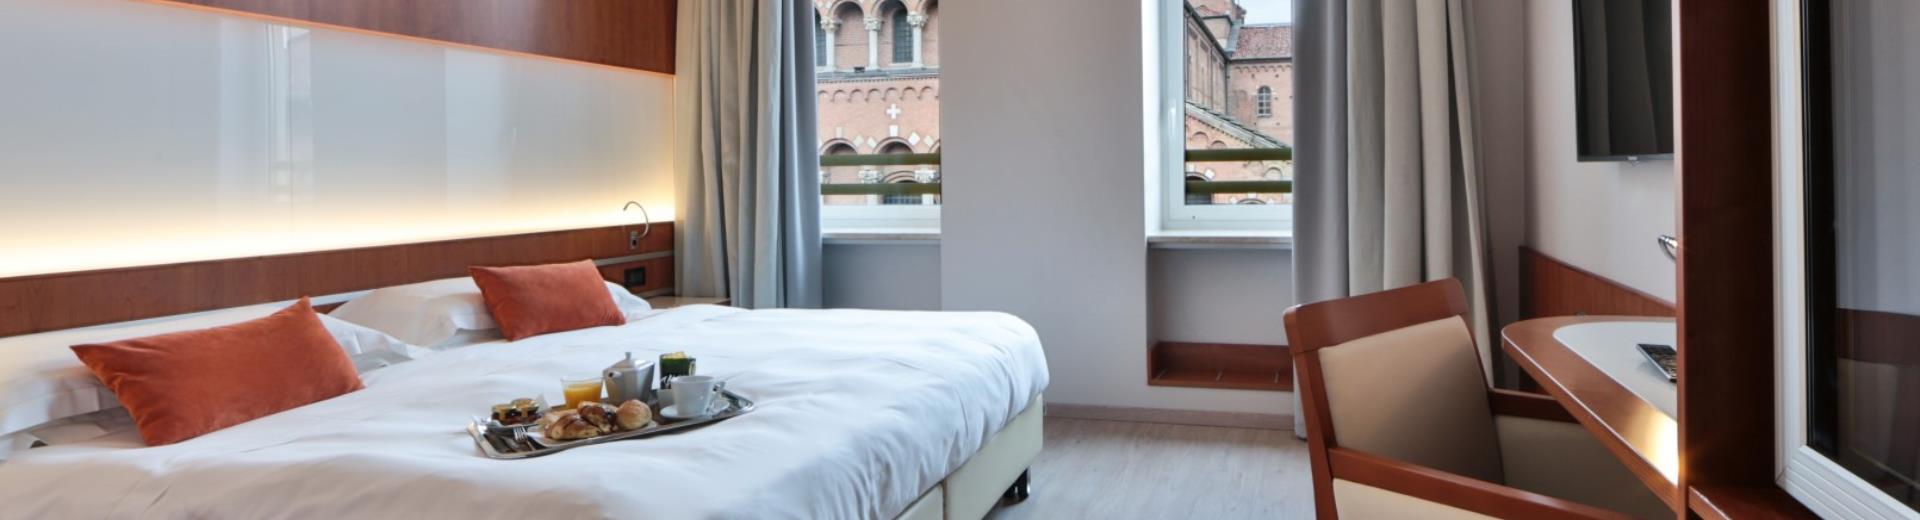 Double twin room-Hotel Astoria Milan